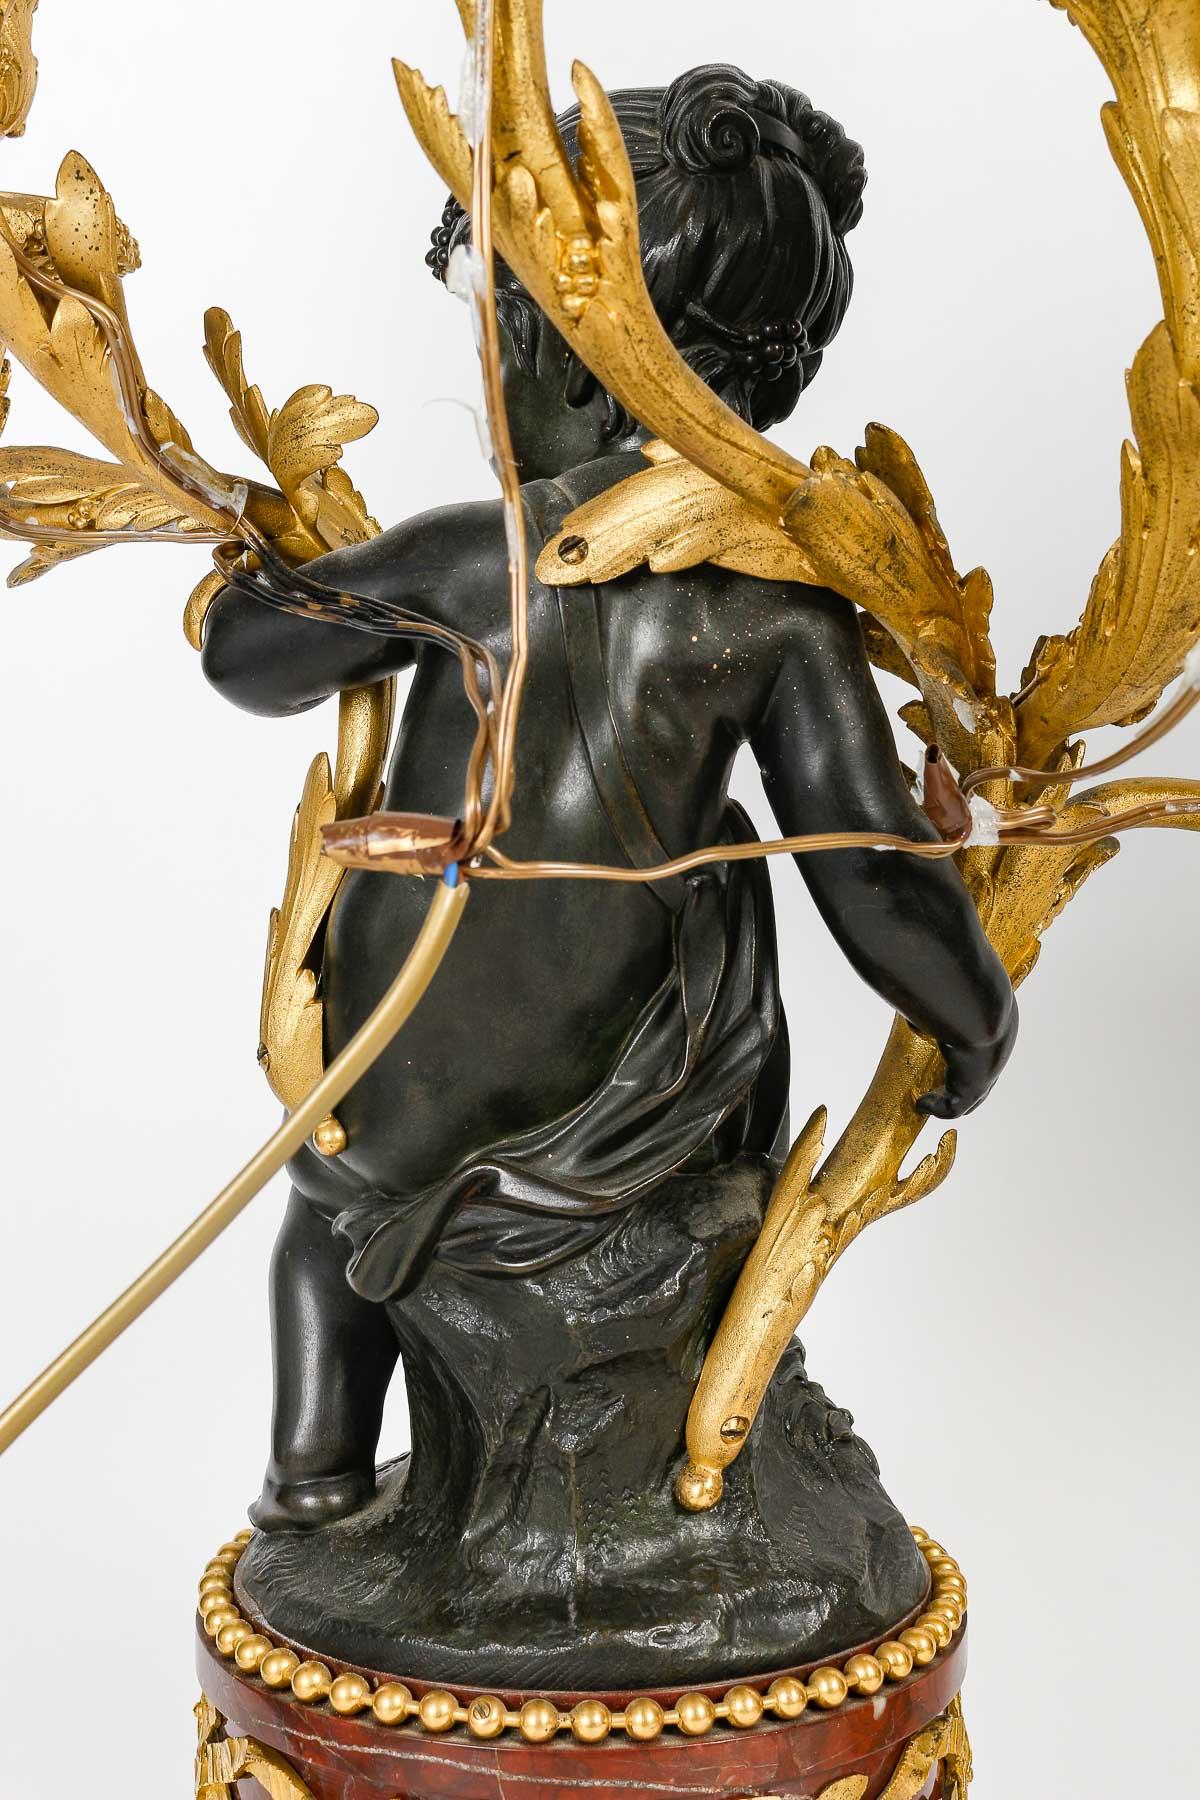 Pair of Amours Candelabra, Grande décoration, Gilt bronze, Antique bronze. 5